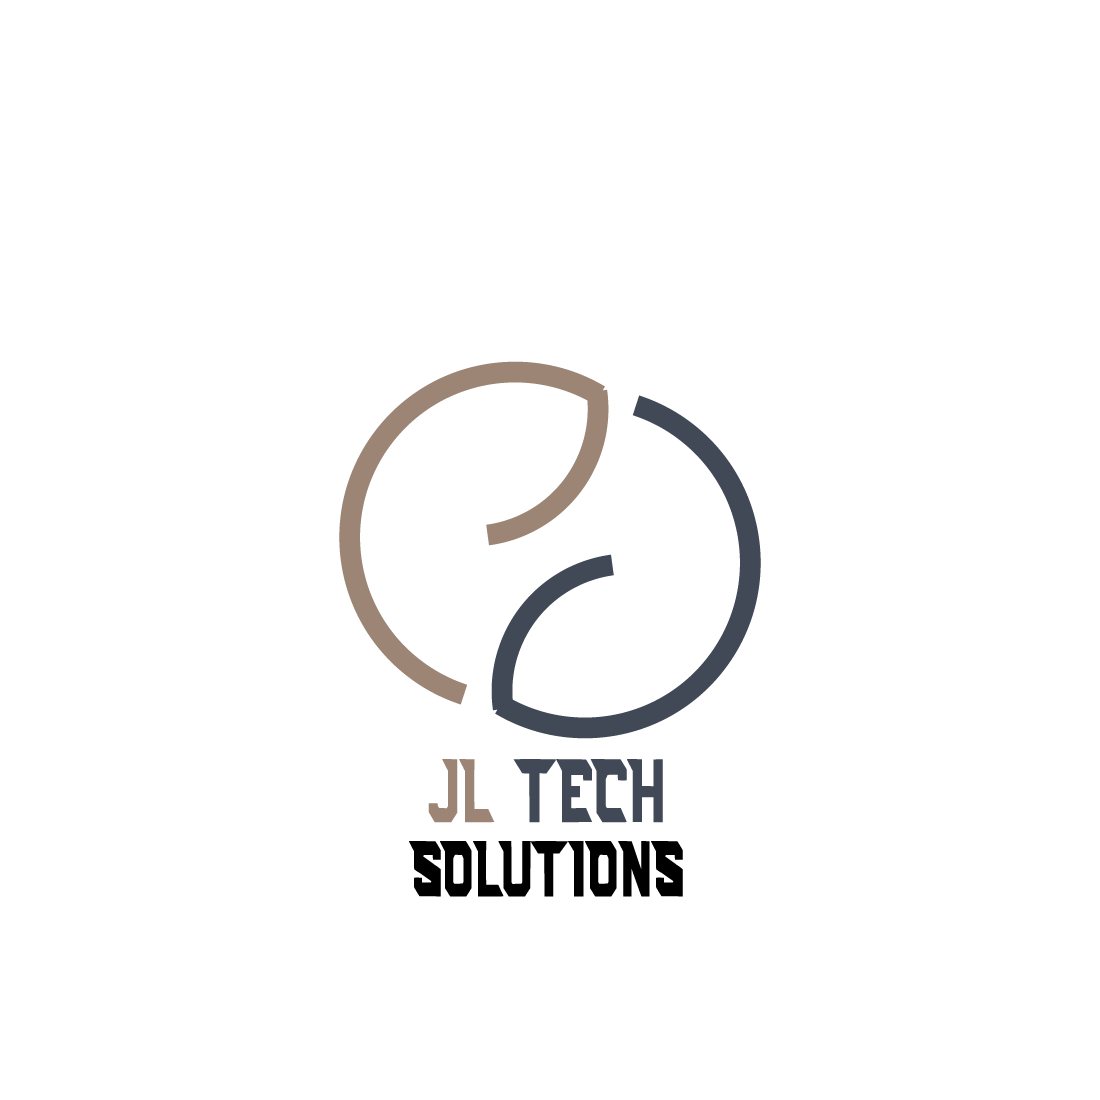 Tech logo preview image.